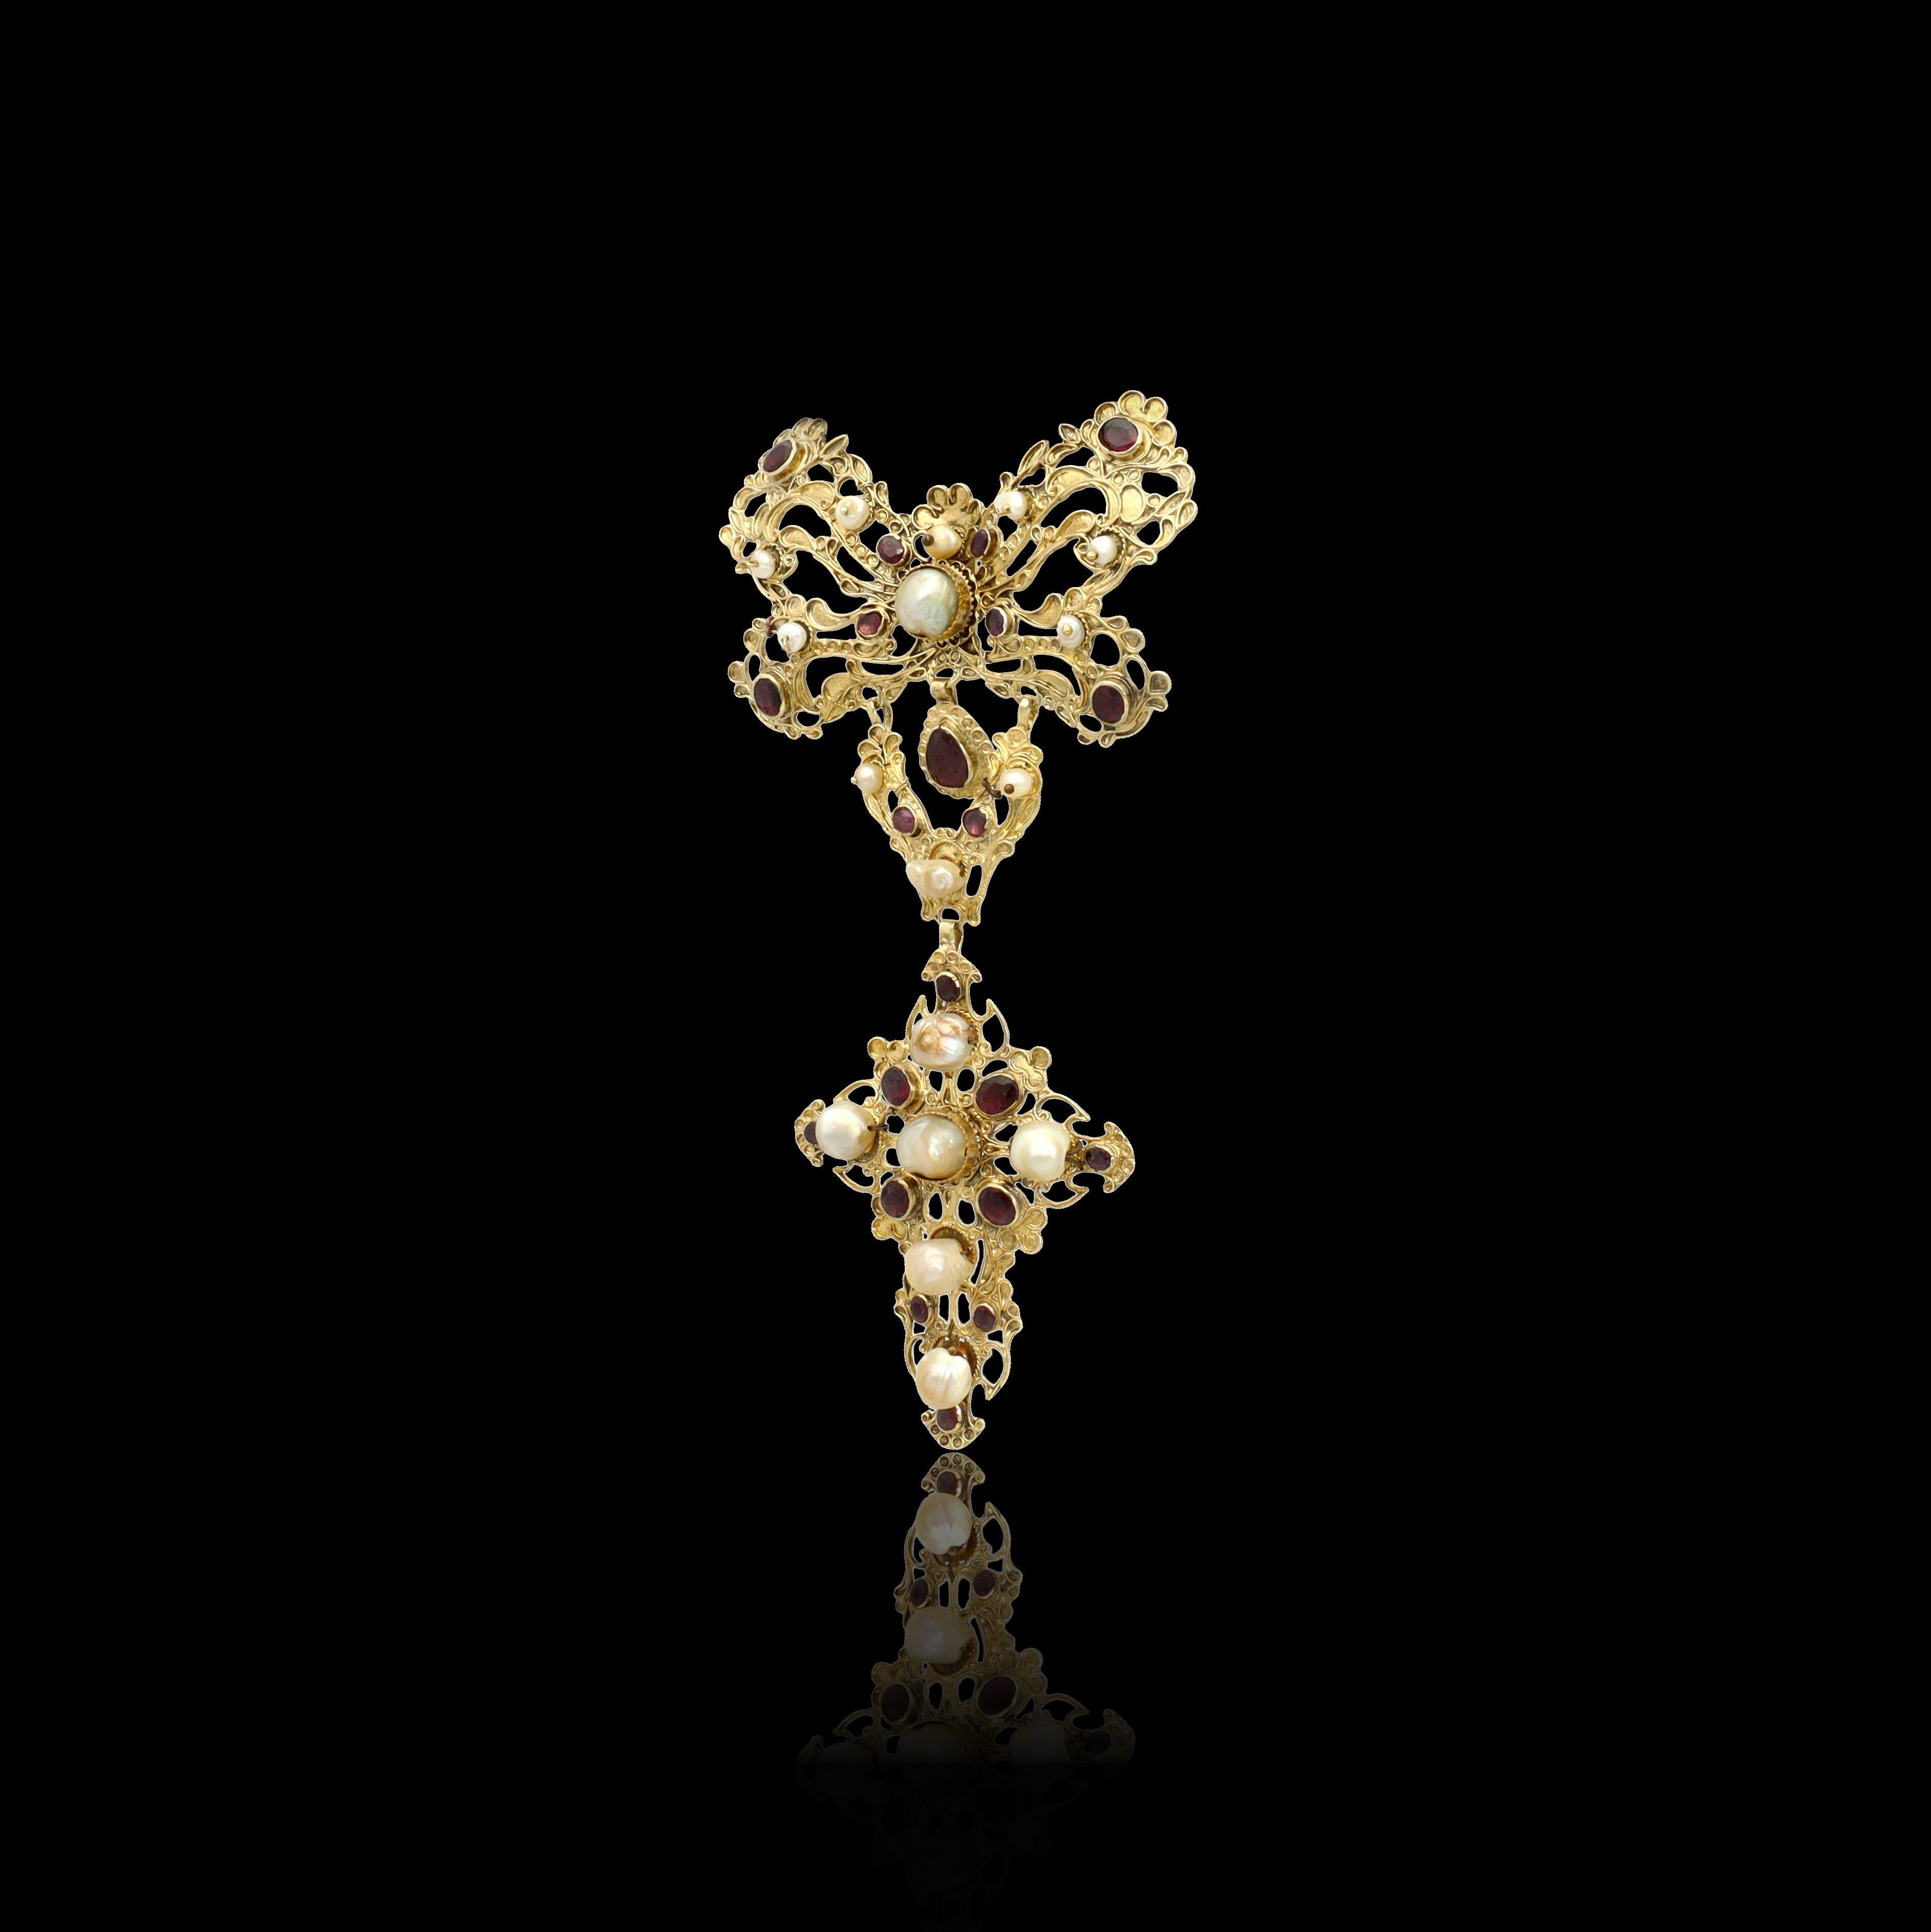 18th century rococo jewelry